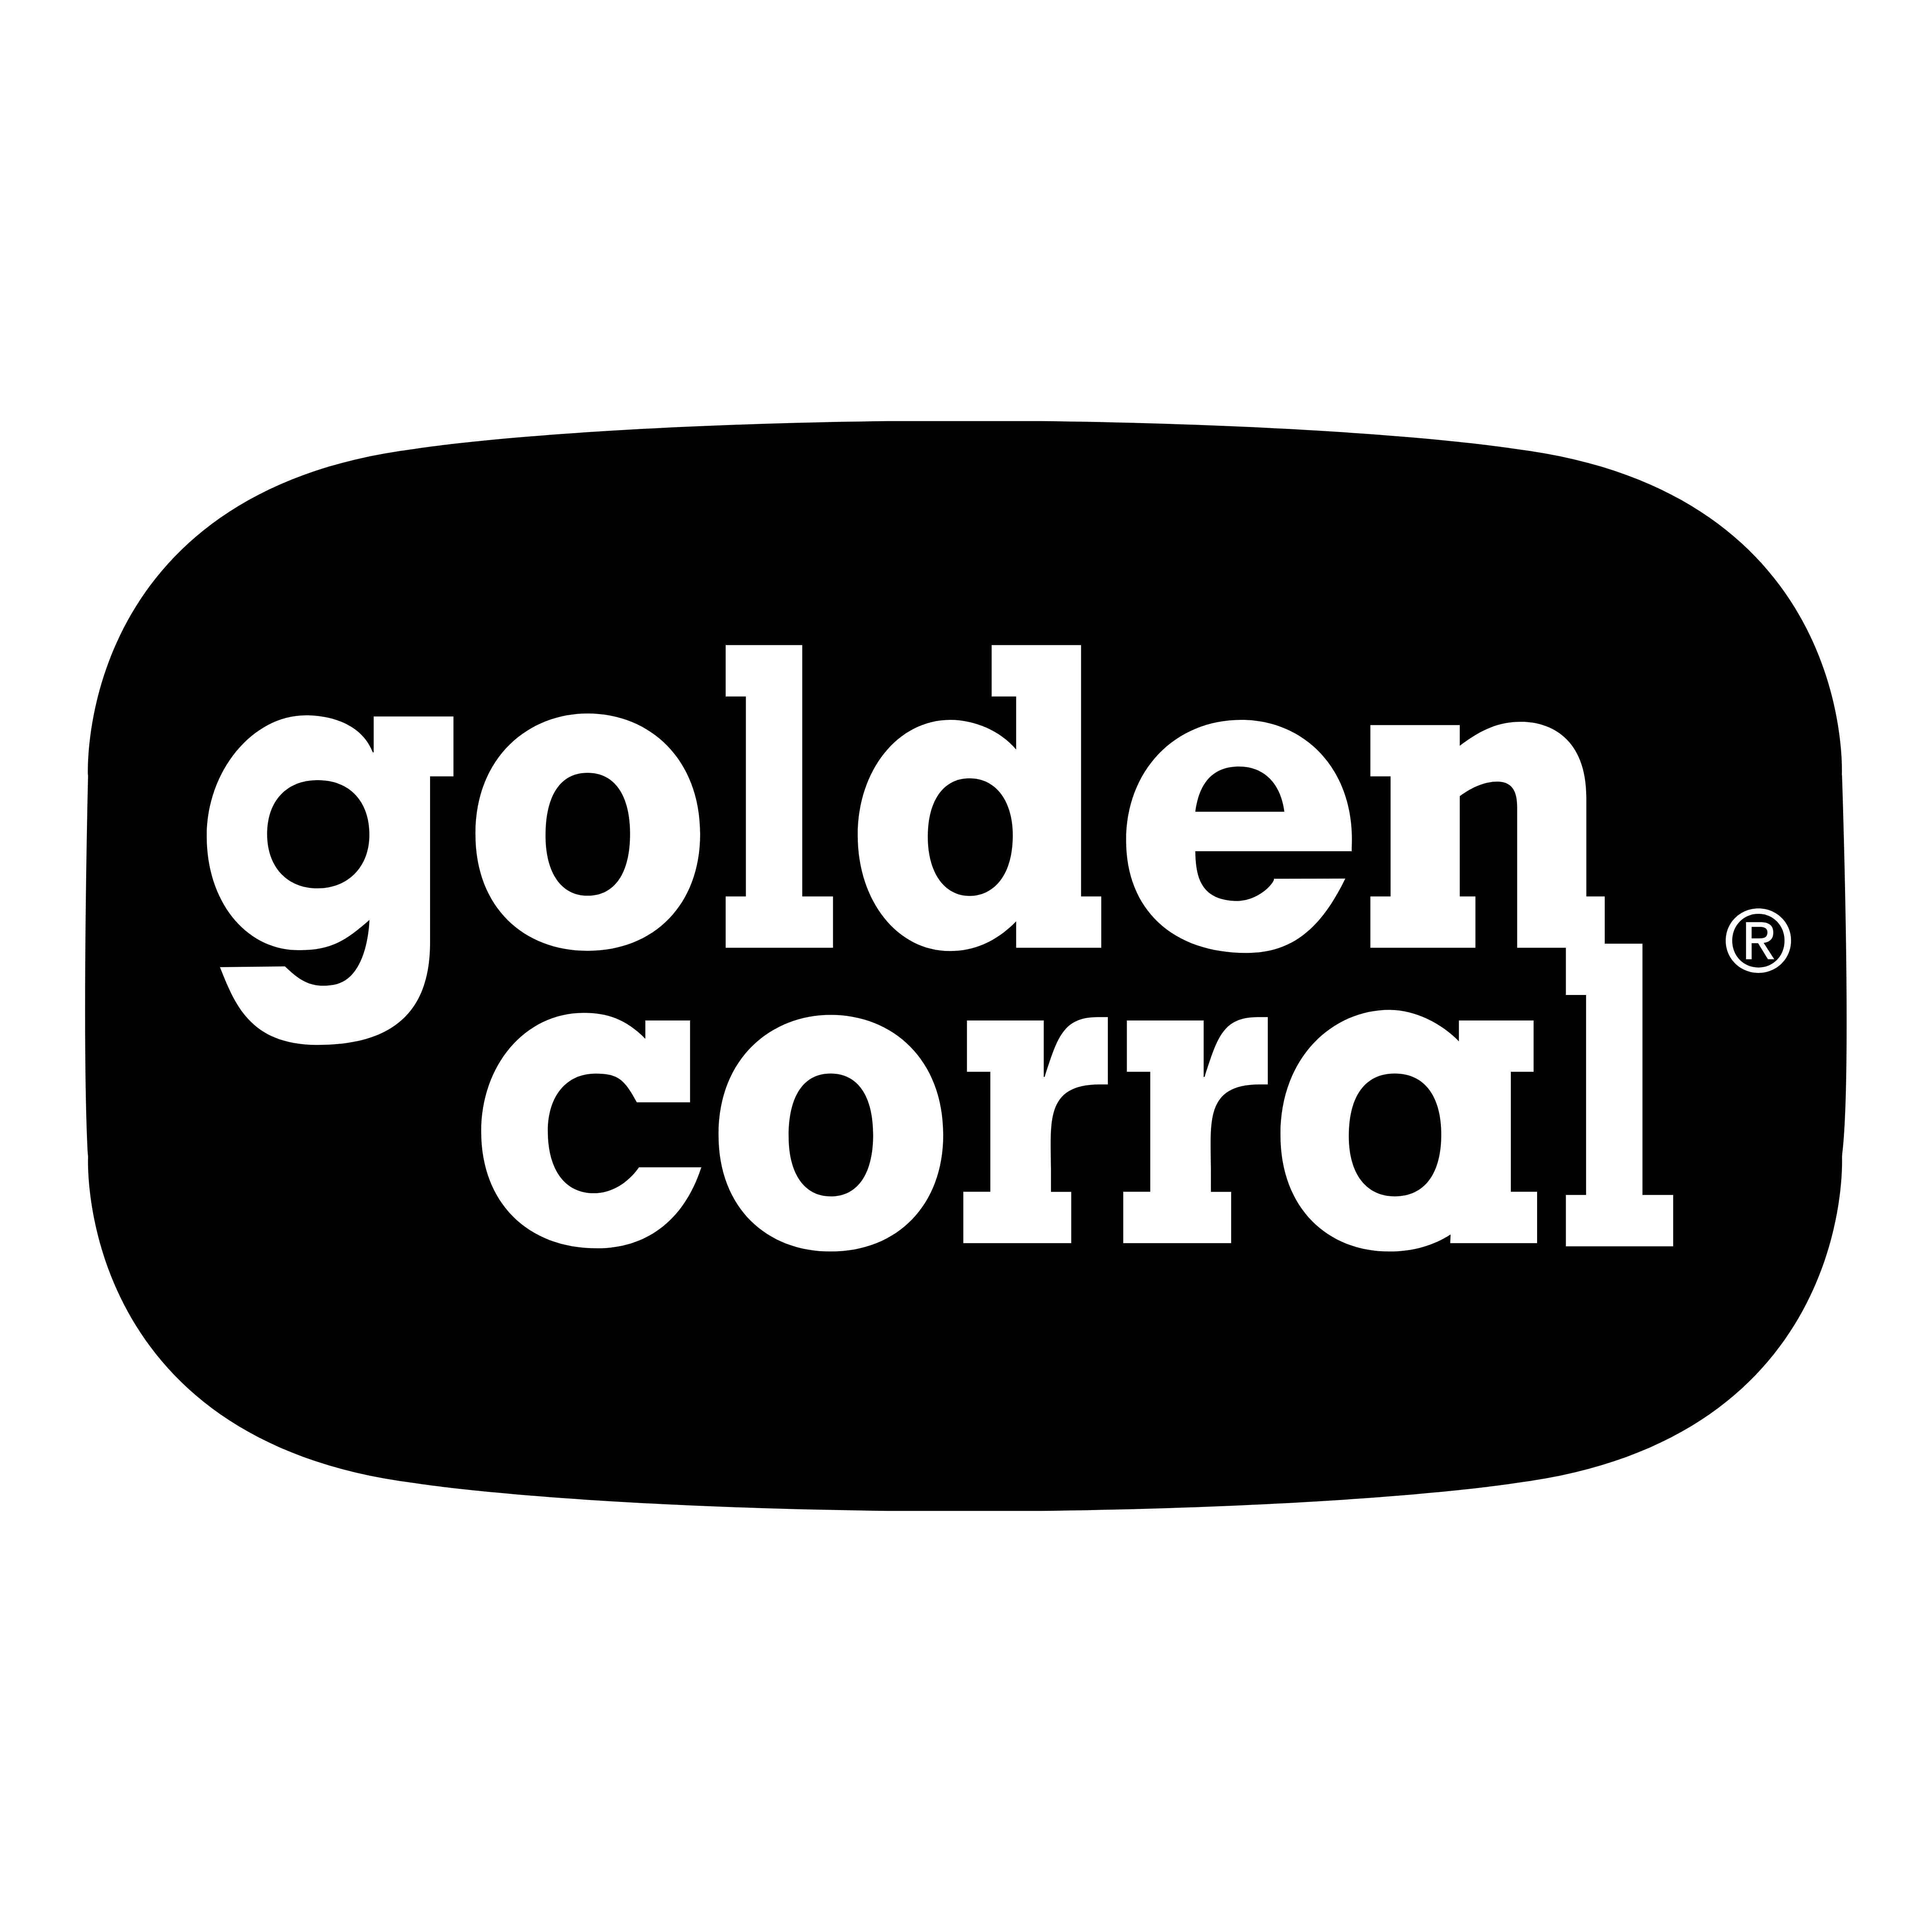 Golden Corral.